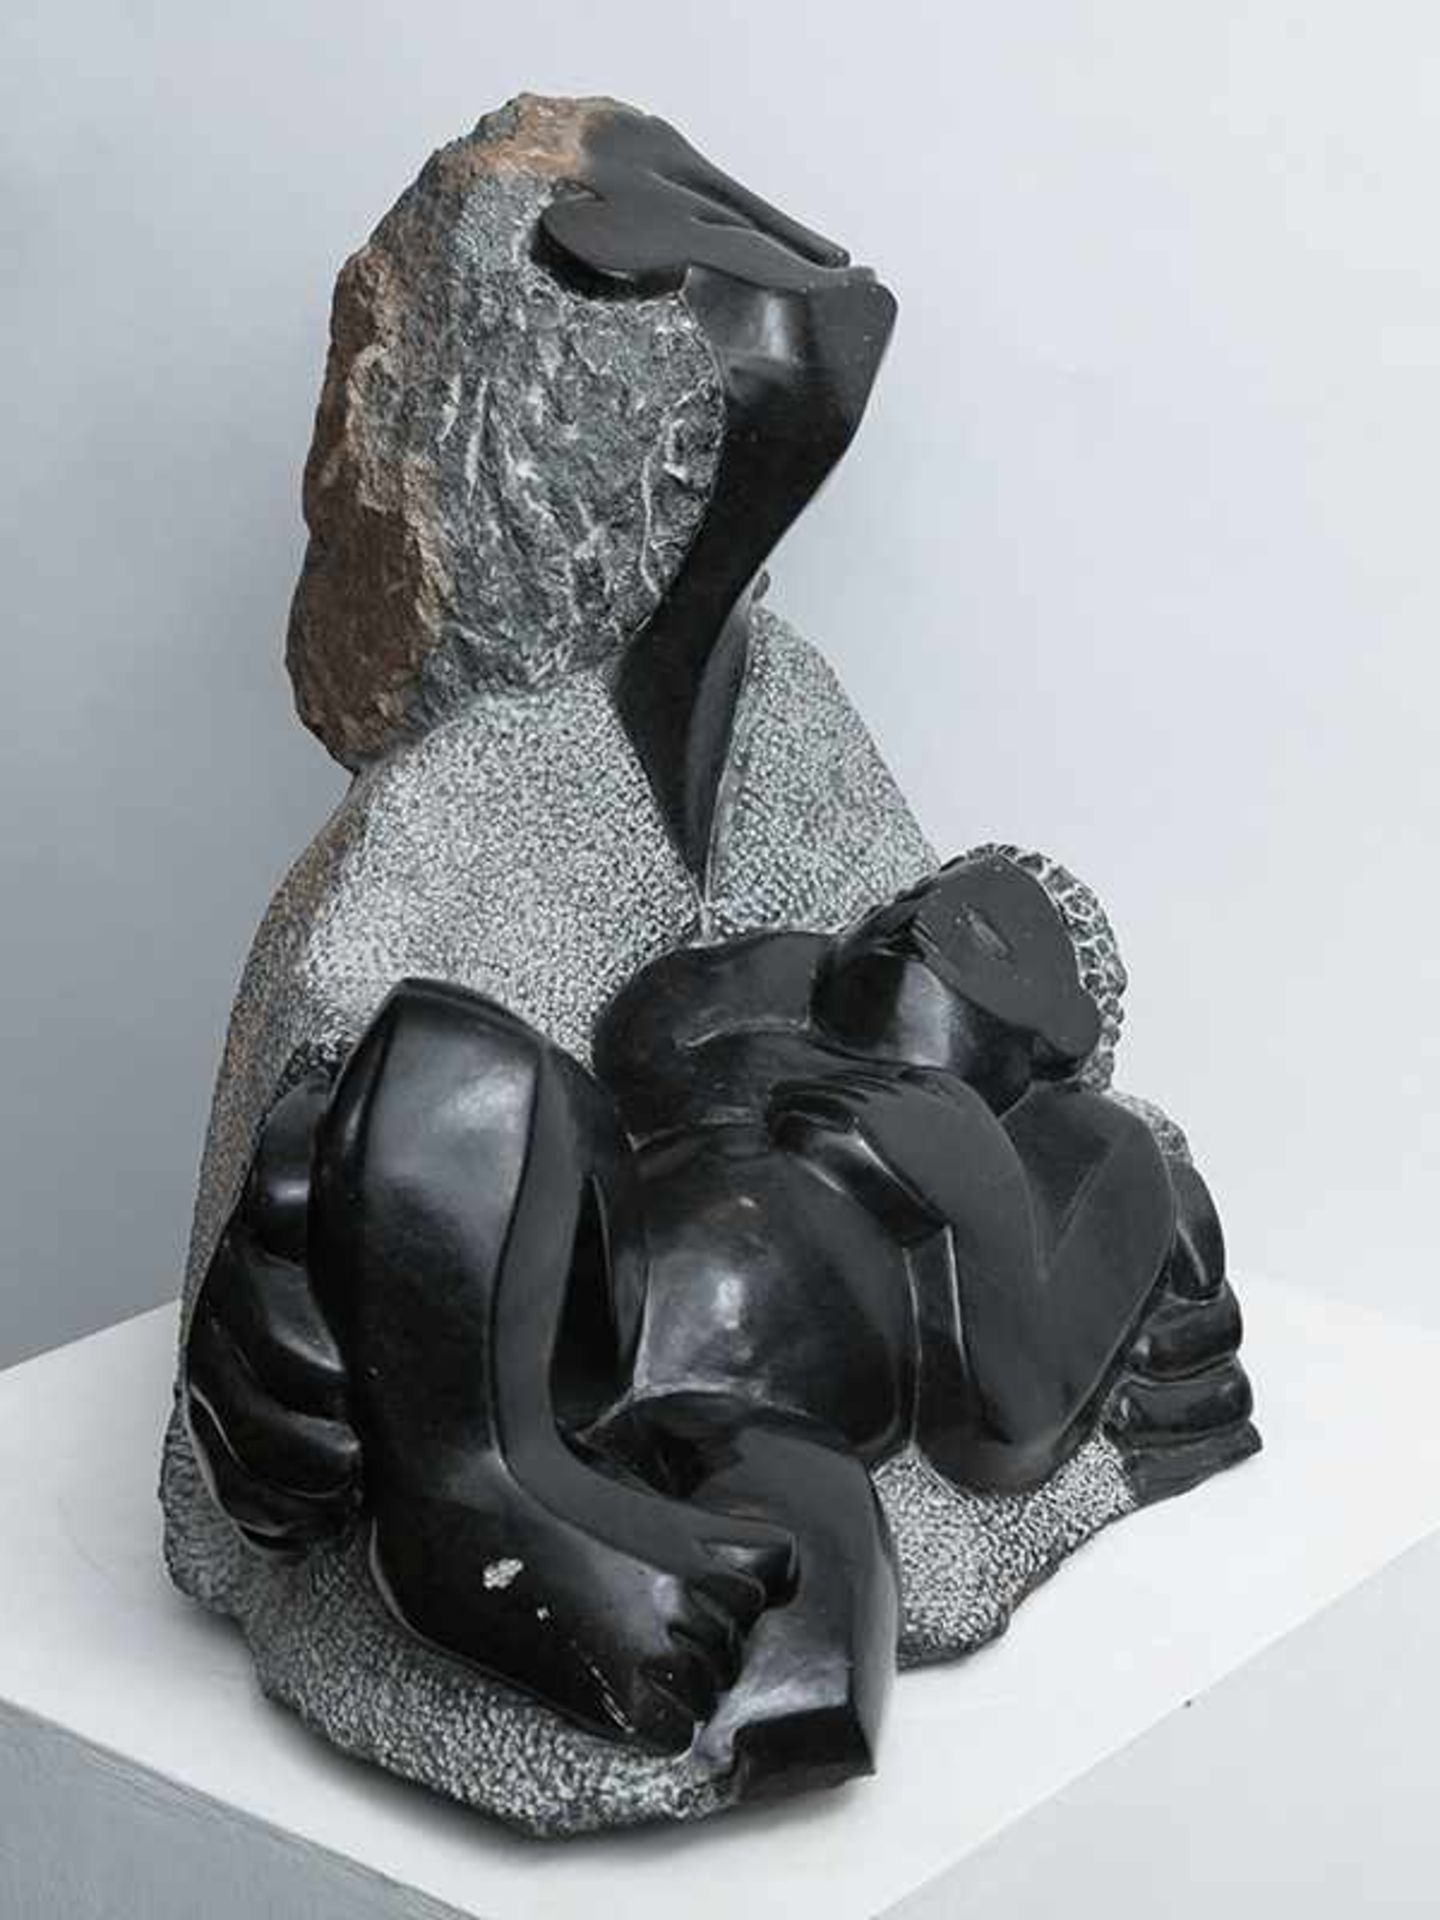 Figurenplastik "Mutter mit Kind", sog. Shona-Skulptur, Simbabwe, Afrika, 2. Hälfte 20. Jh. - Bild 4 aus 7